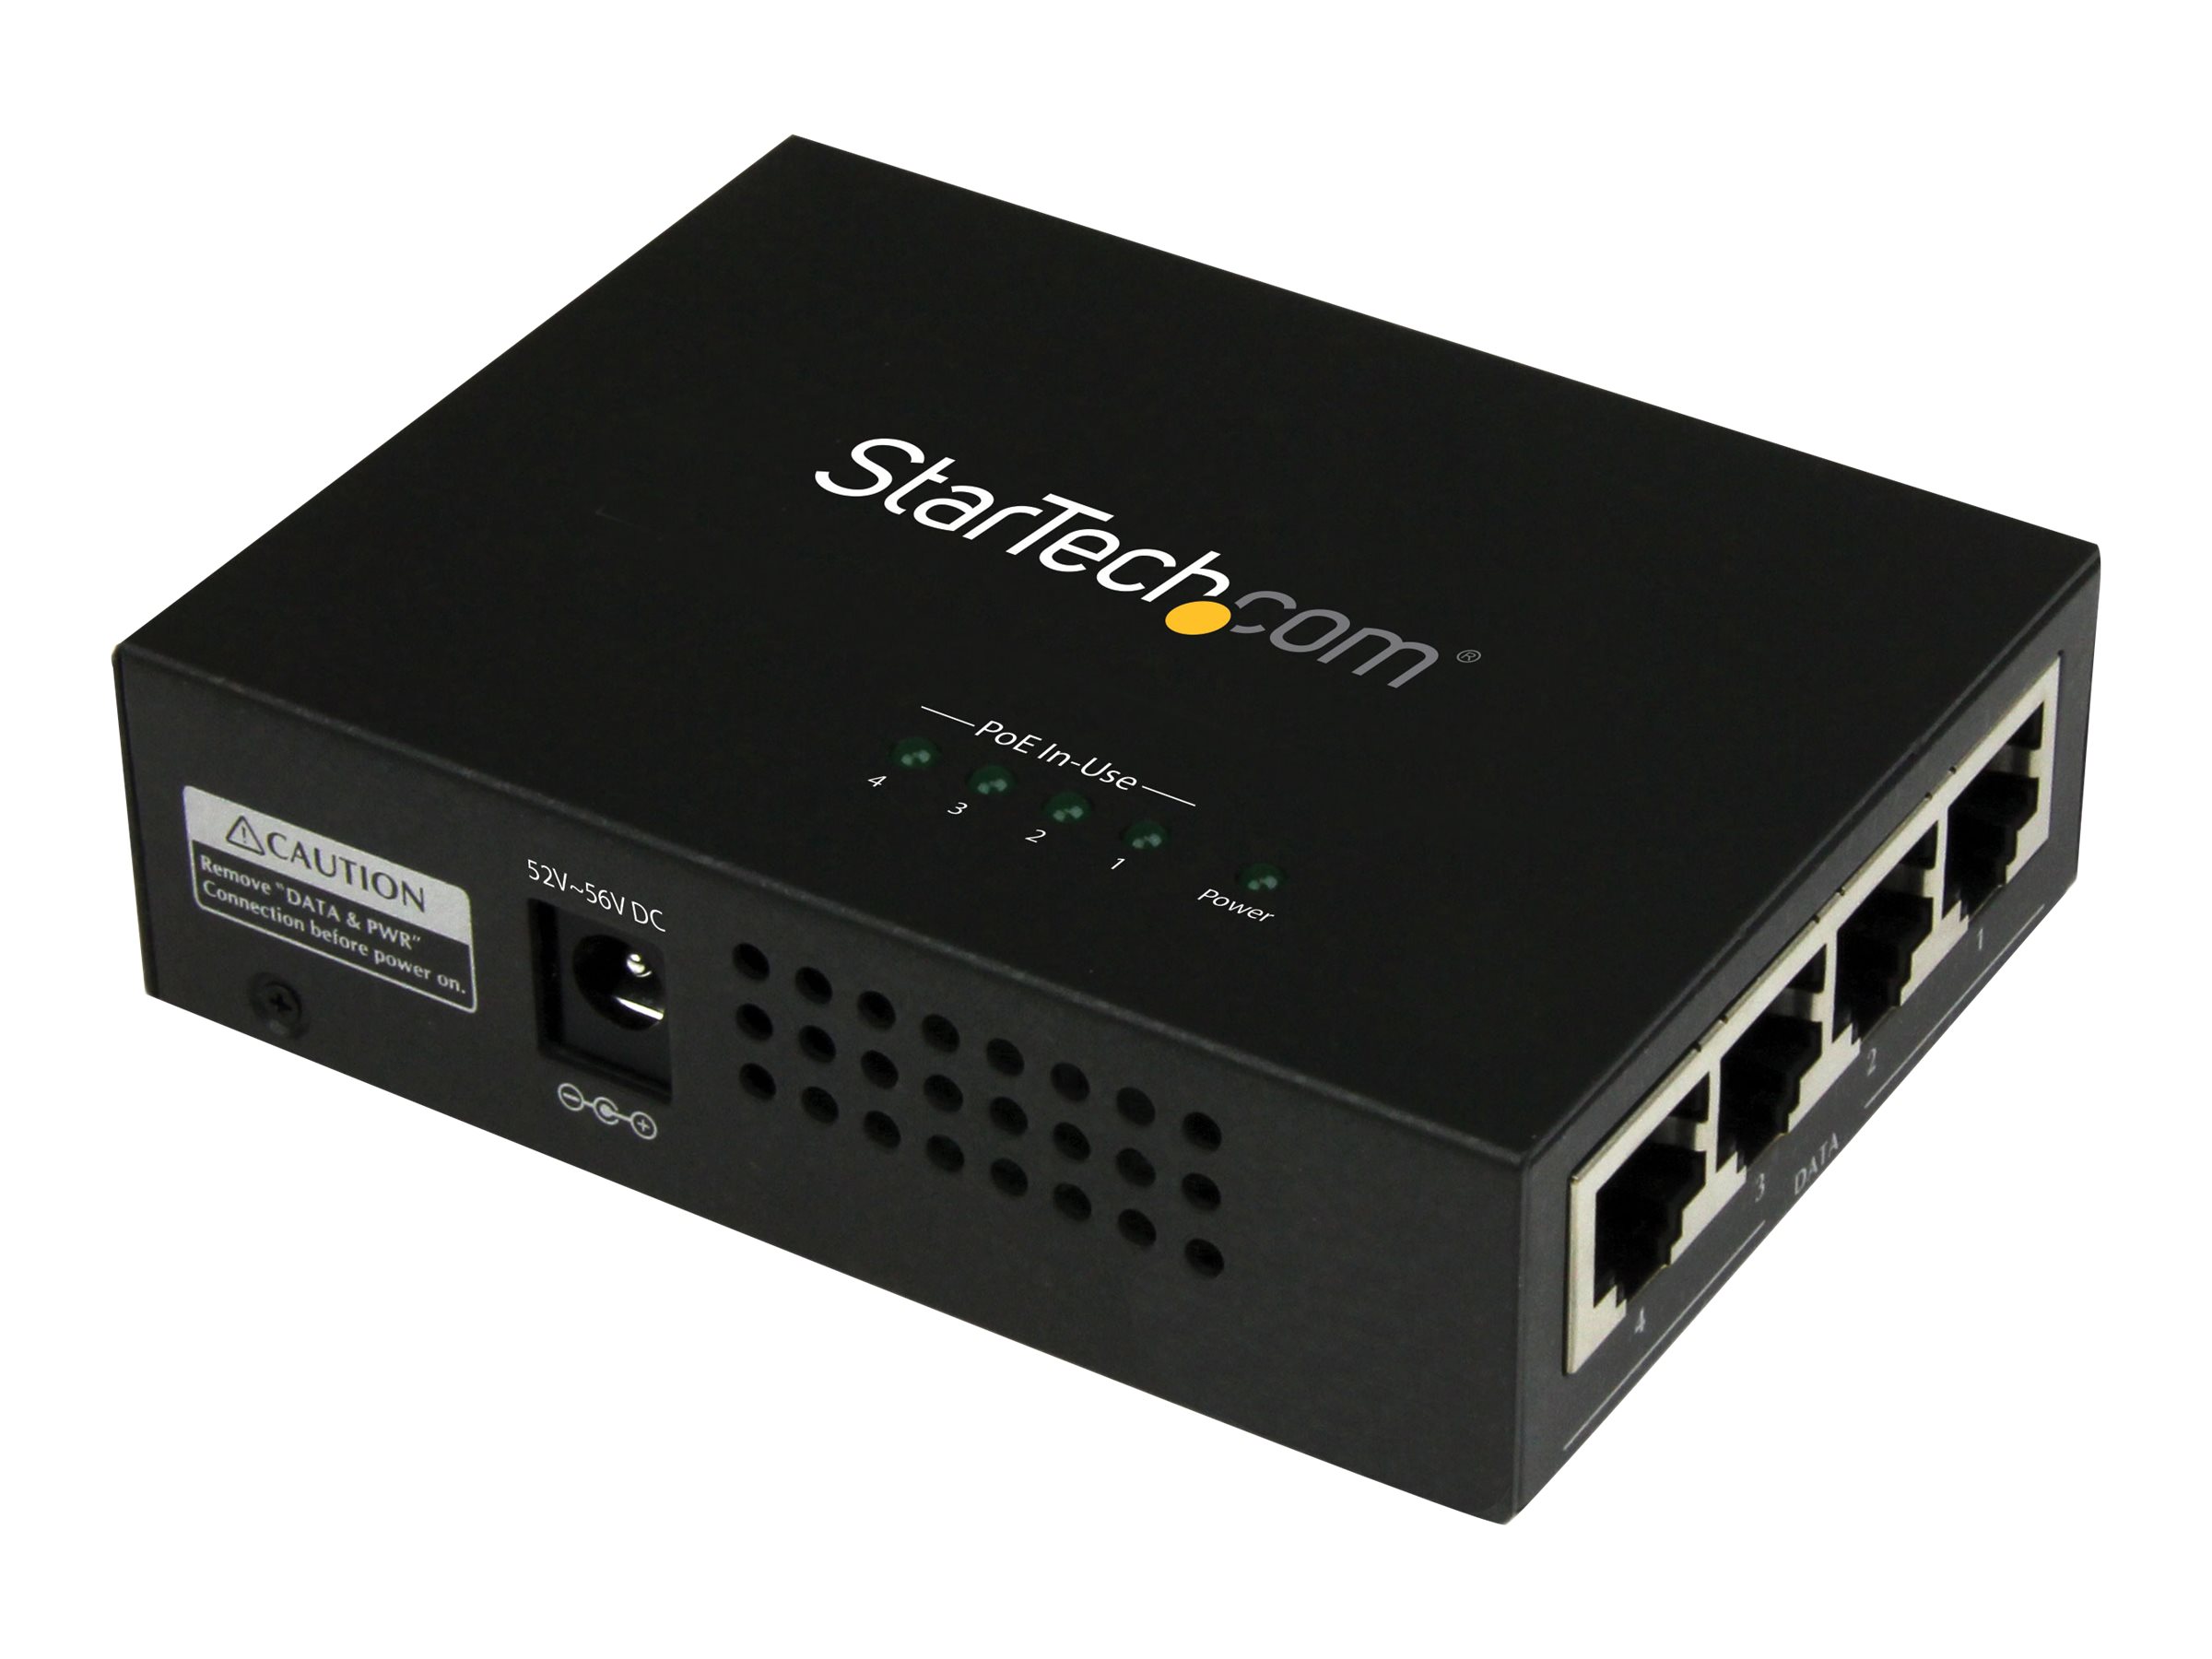 StarTech.com 4 Port Gigabit midspan - PoE+ Injektor - 802.3at/af - Wandmontierbar Power over Ethernet Midspan - Power Injector -